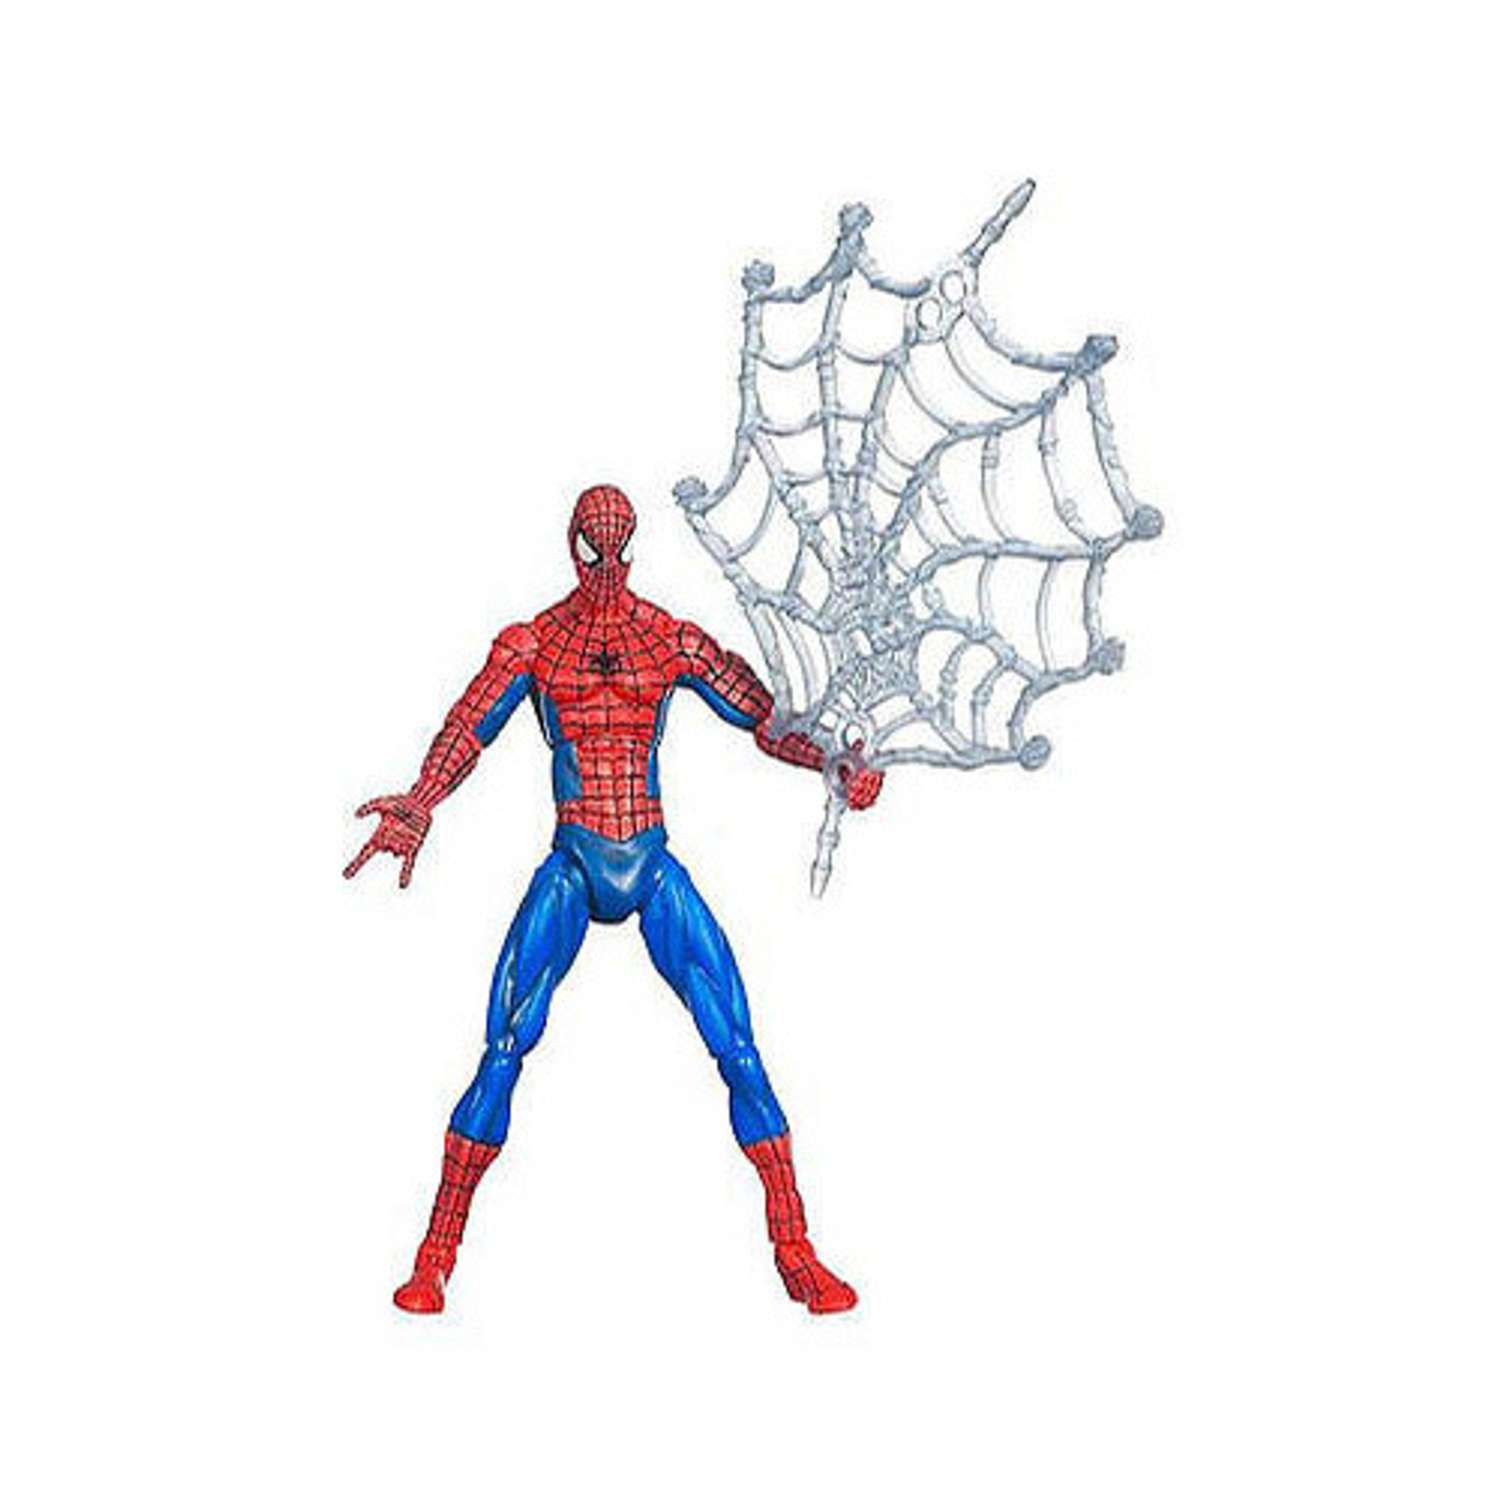 Фигурка Человек-Паук (Spider-man) Человек-Паук 9 см в ассортименте - фото 8